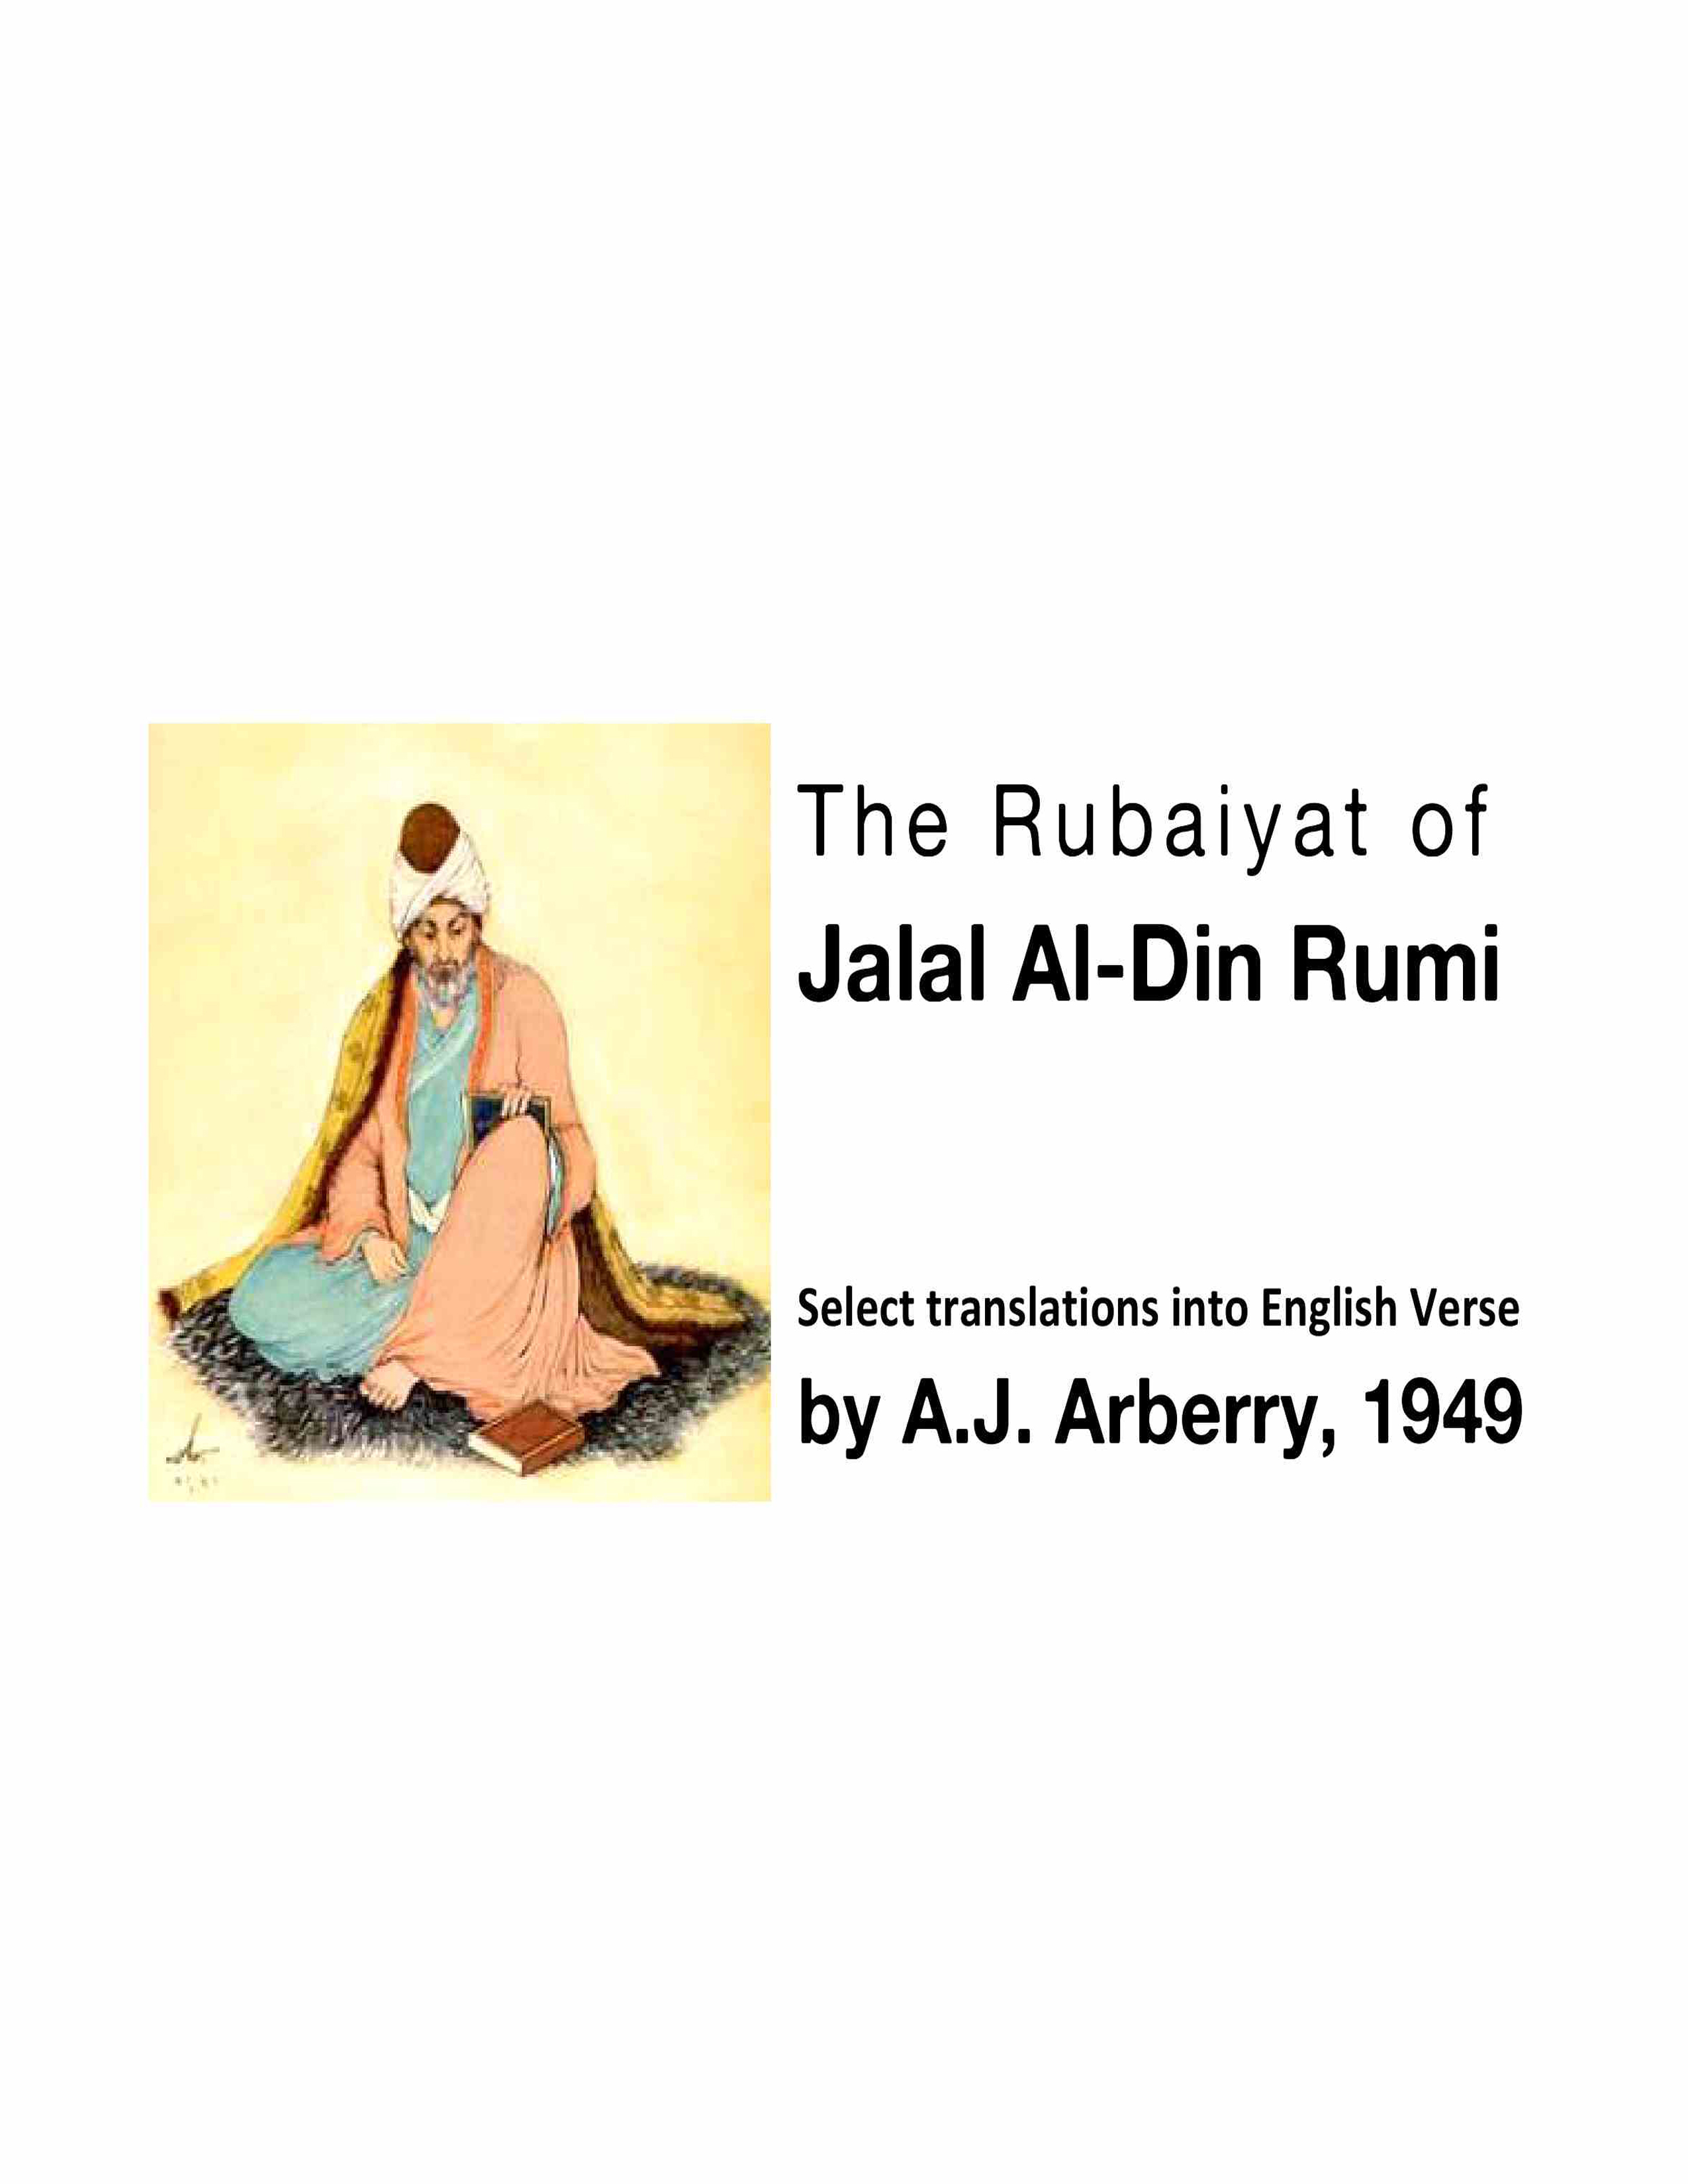 The Rubaiyat of Jalaluddeen Rumi